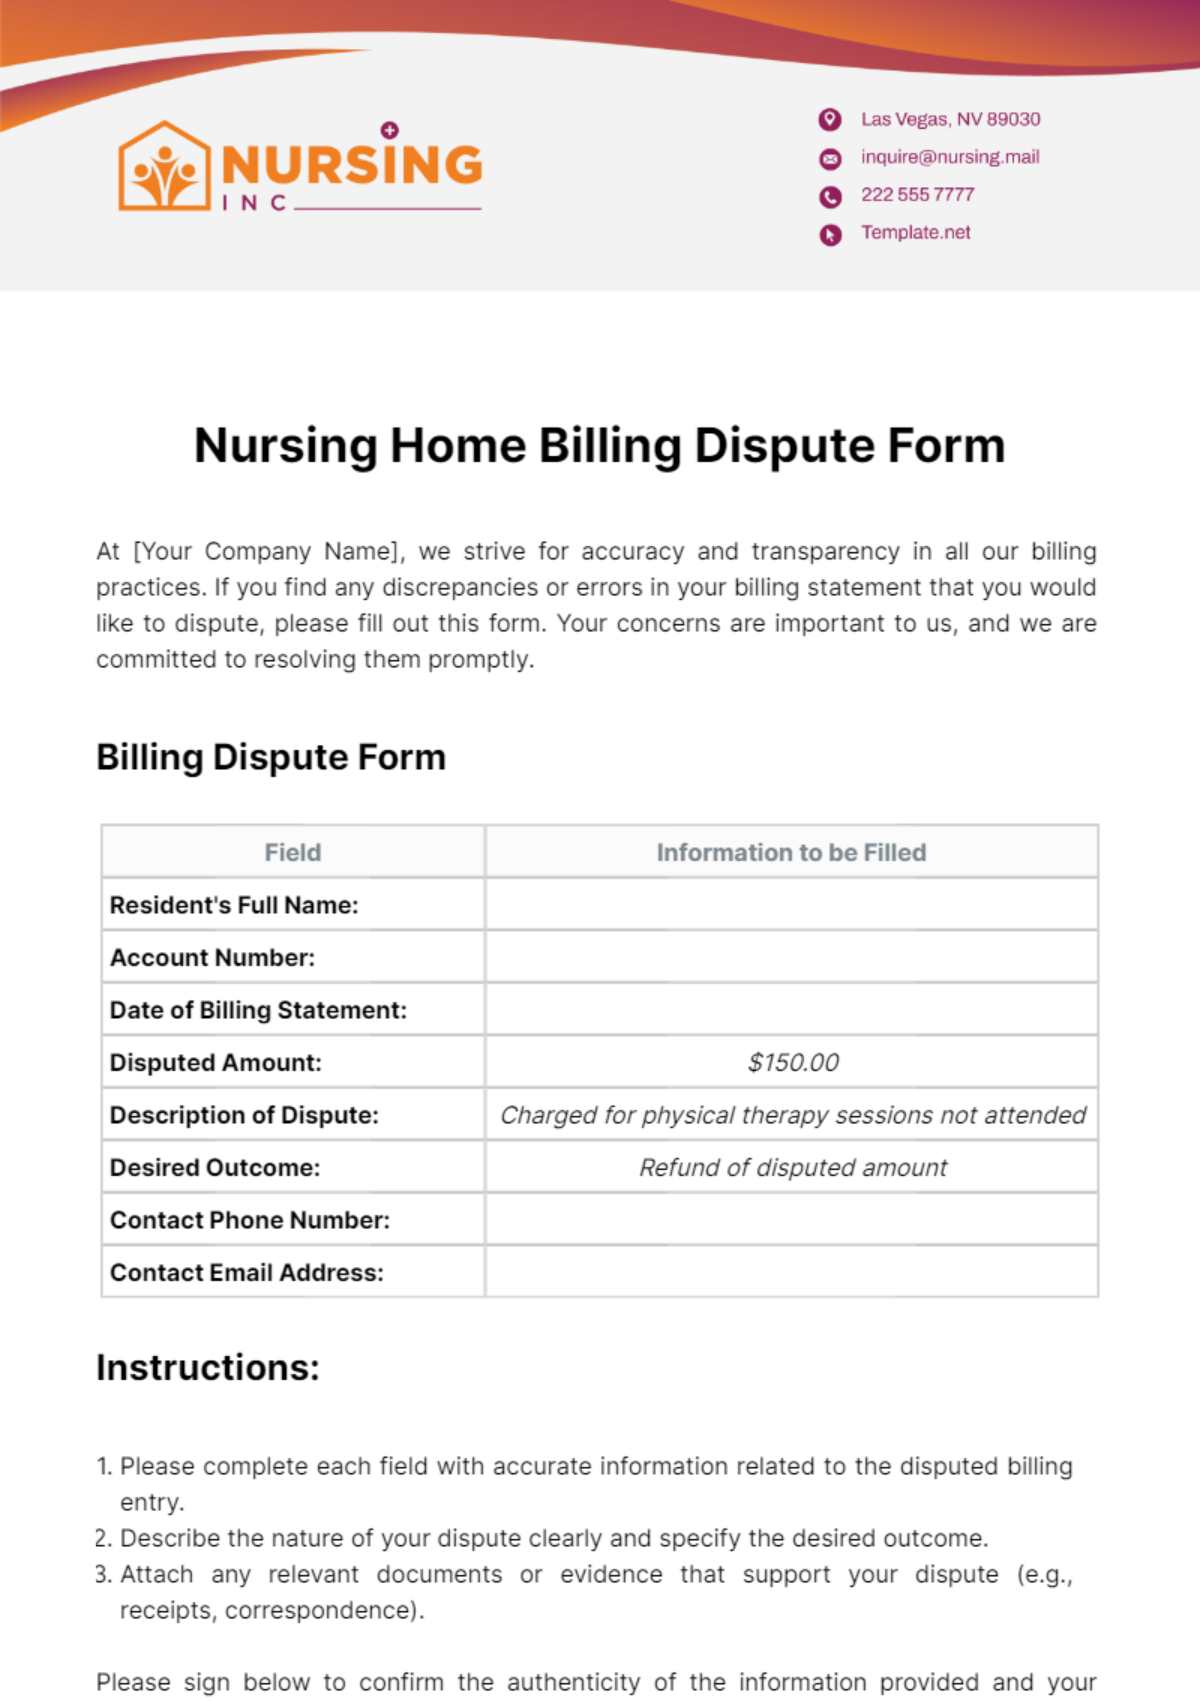 Nursing Home Billing Dispute Form Template